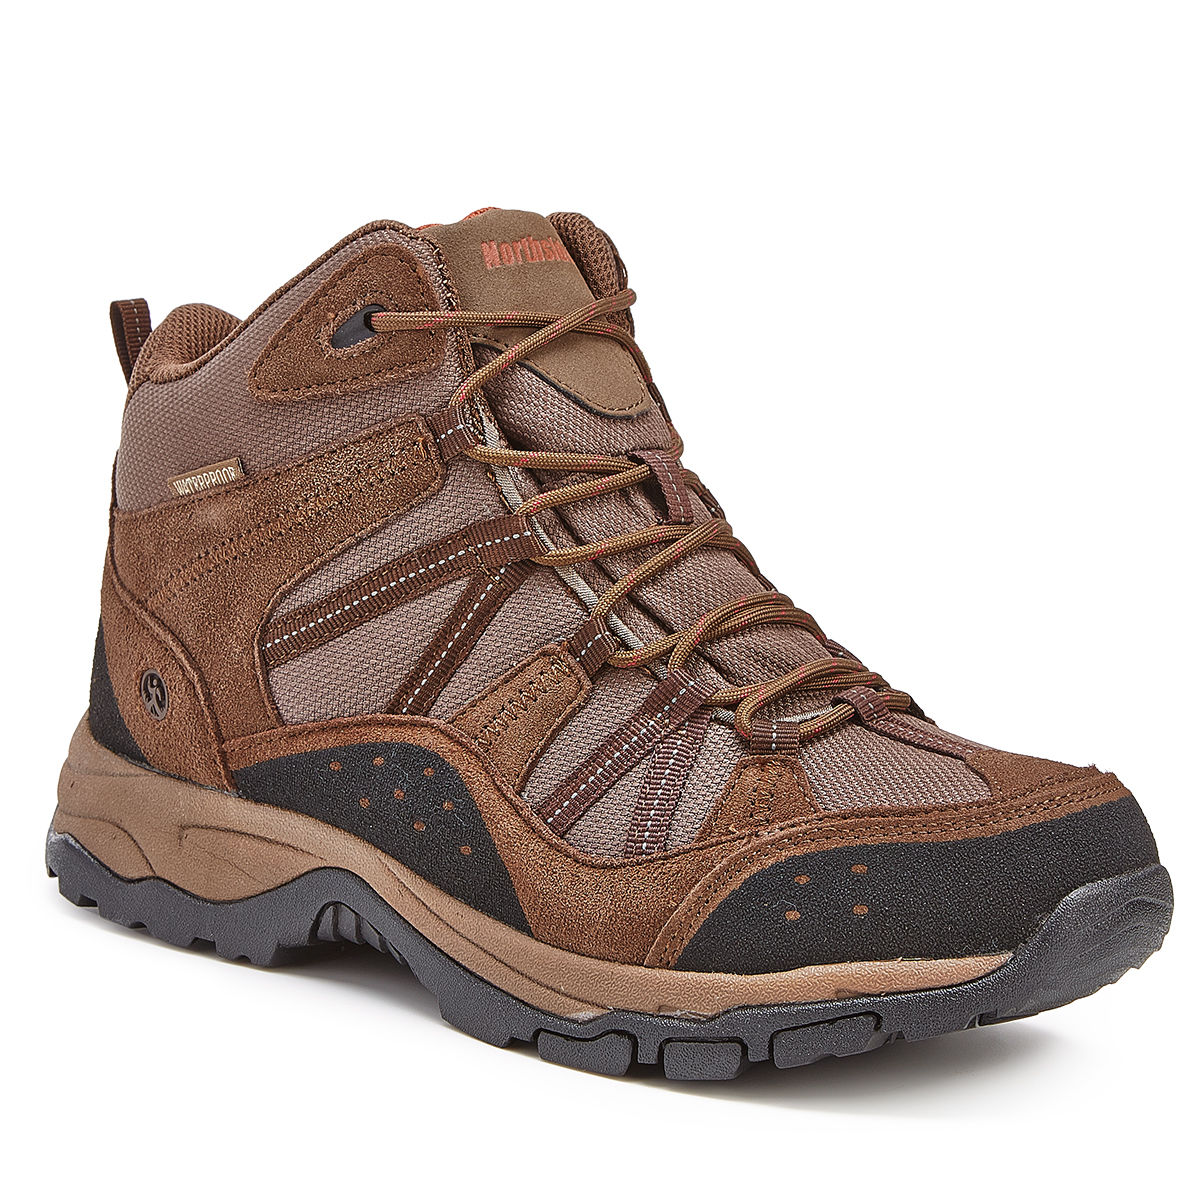 Northside Men's Freemont Mid Waterproof Hiking Boots - Brown, 8.5